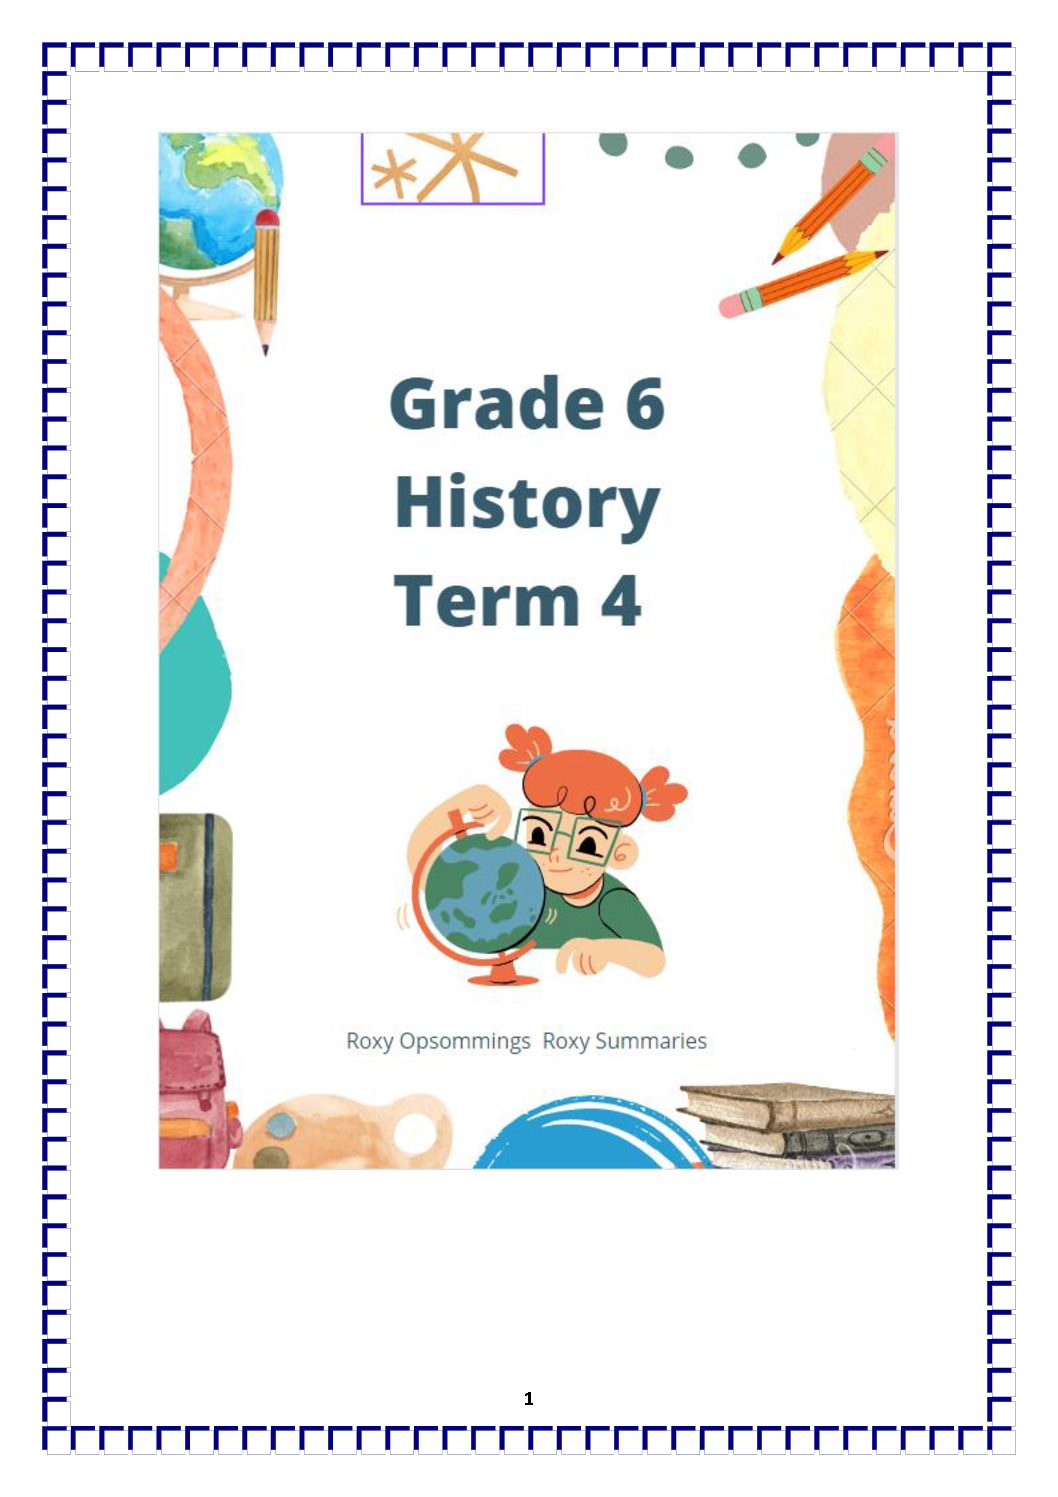 history term 4 grade 6 content • Teacha